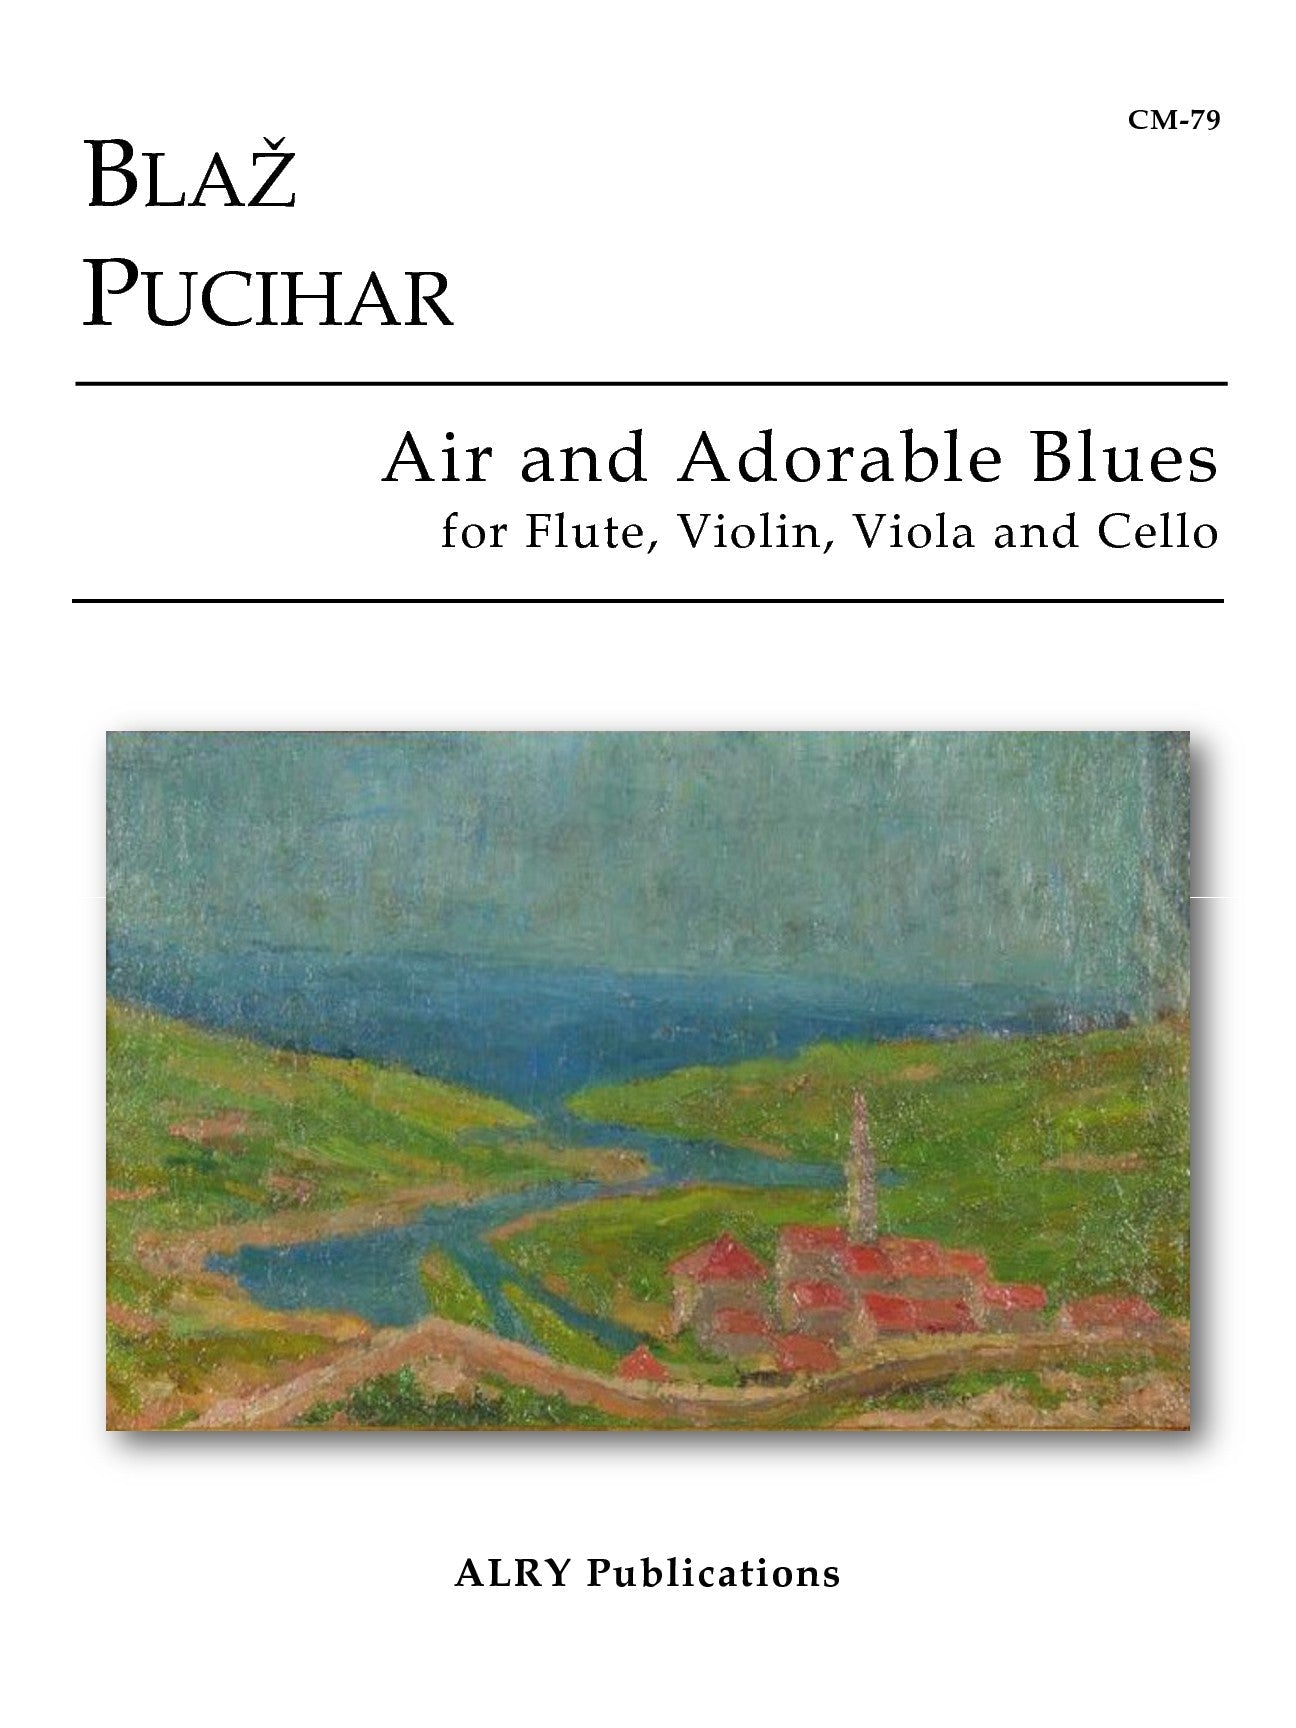 Pucihar: Air and Adorable Blues